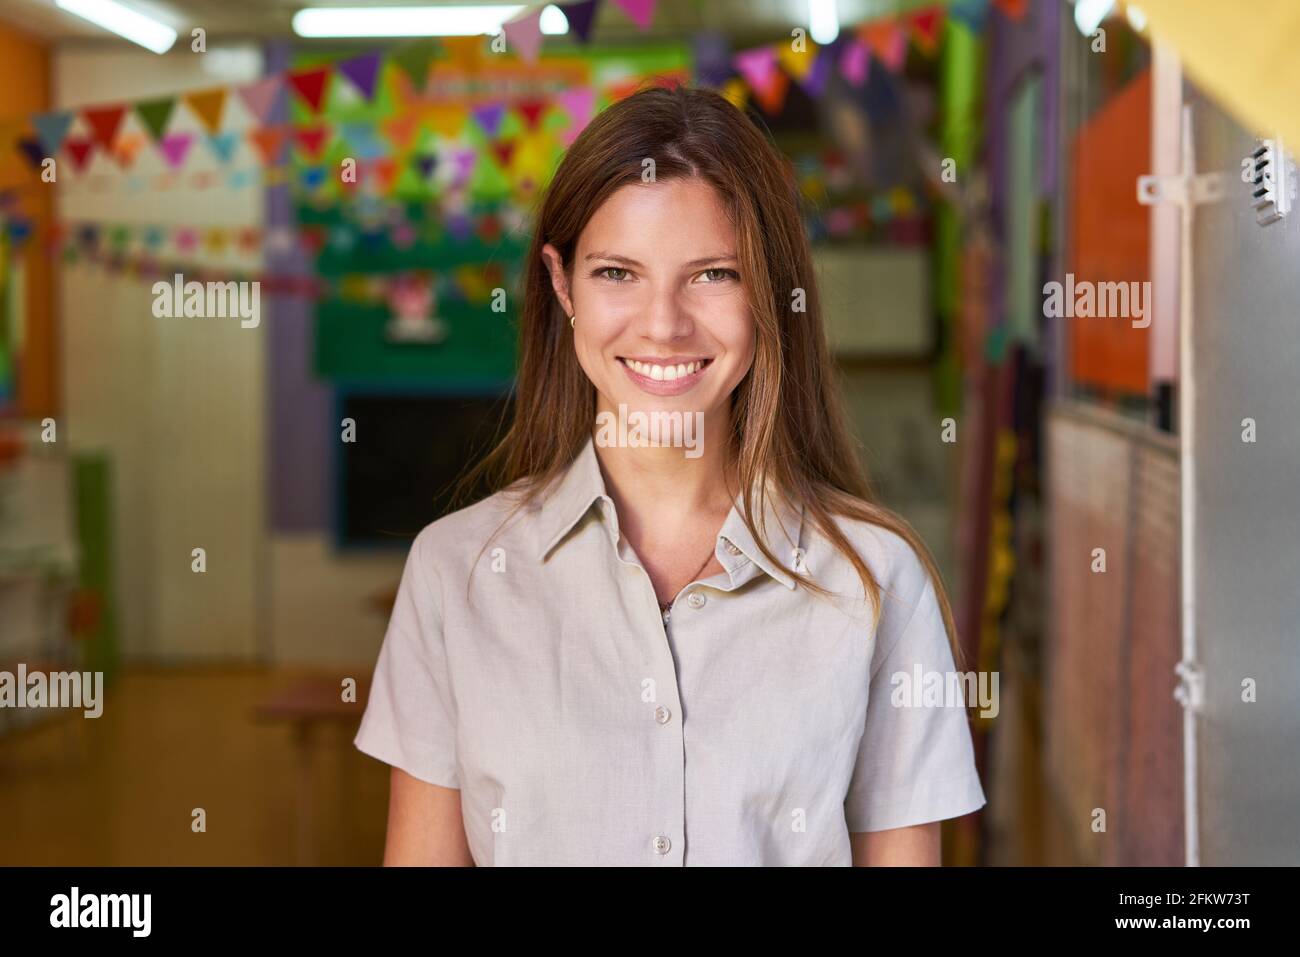 Friendly young woman as a teacher or kindergarten teacher in kindergarten or preschool Stock Photo